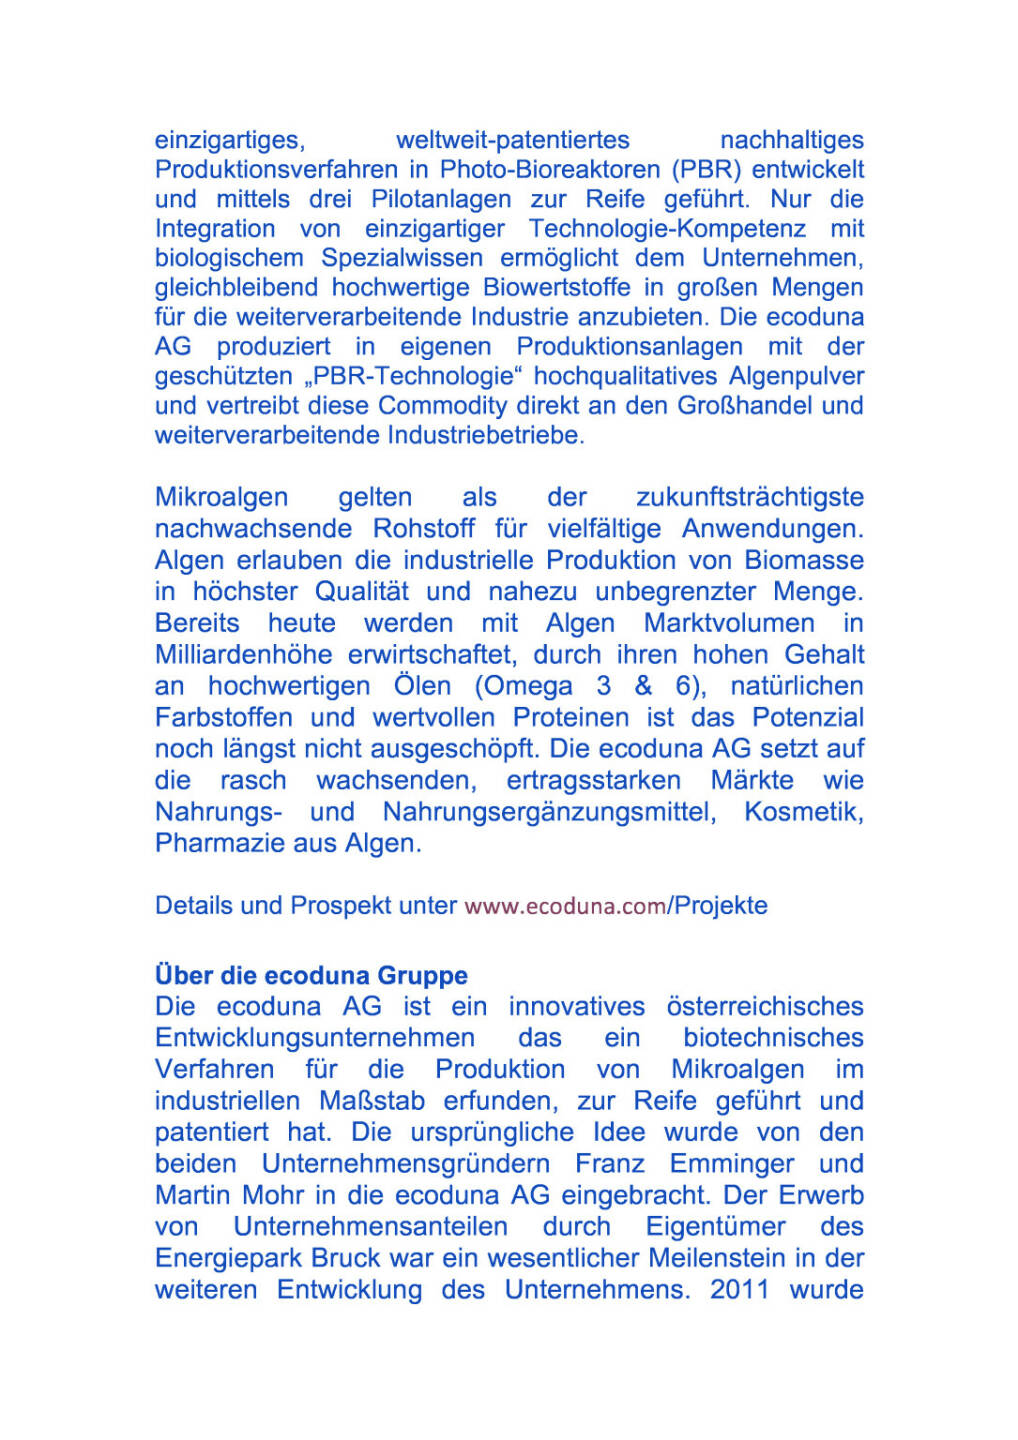 Kapitalerhöhung der ecoduna AG, Seite 3/4, komplettes Dokument unter http://boerse-social.com/static/uploads/file_699_kapitalerhohung_der_ecoduna_ag.pdf